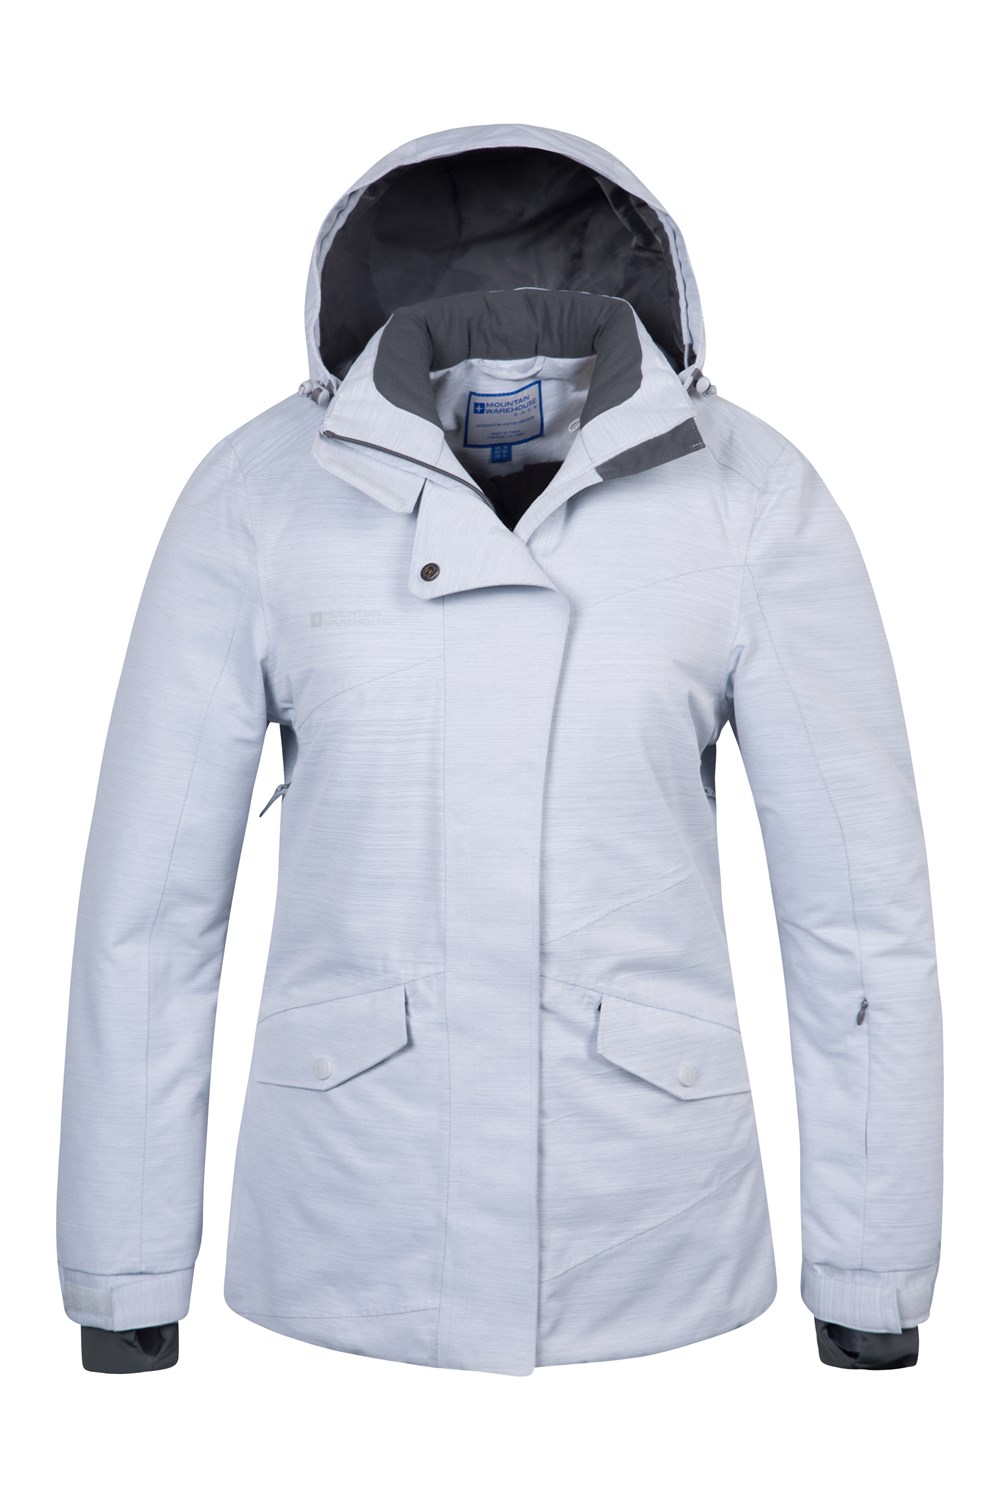 Mountain Warehouse Womens Waterproof Ski Jacket 100% Polyester with ...